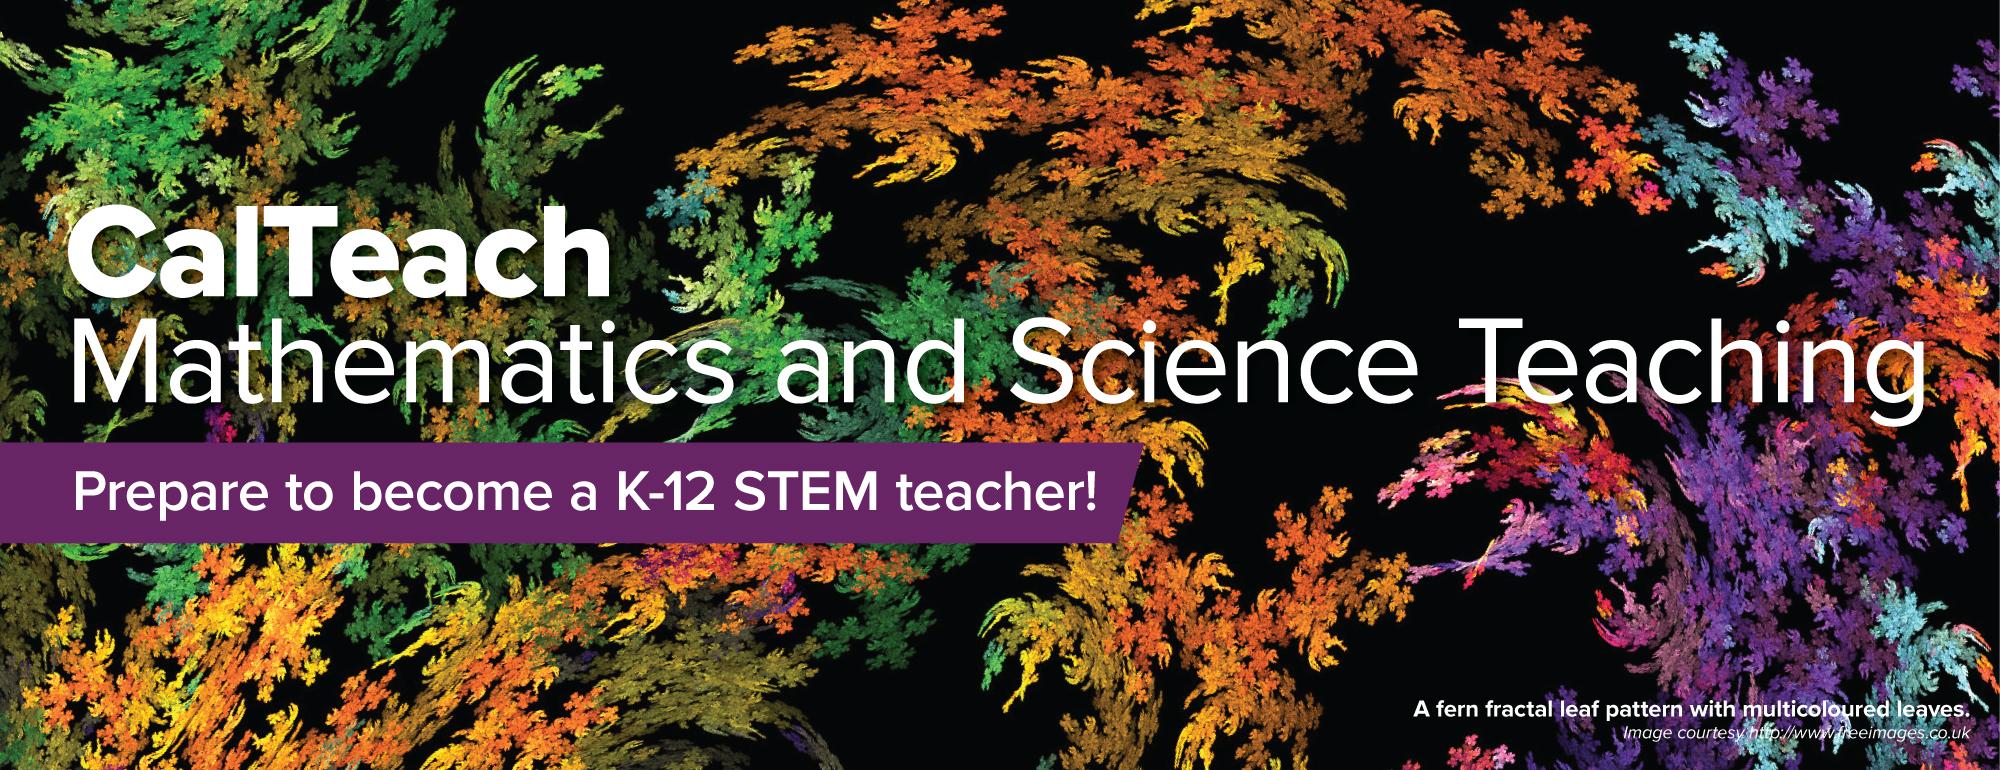 CalTeach/MAST: Prepare to become a K-12 STEM teacher